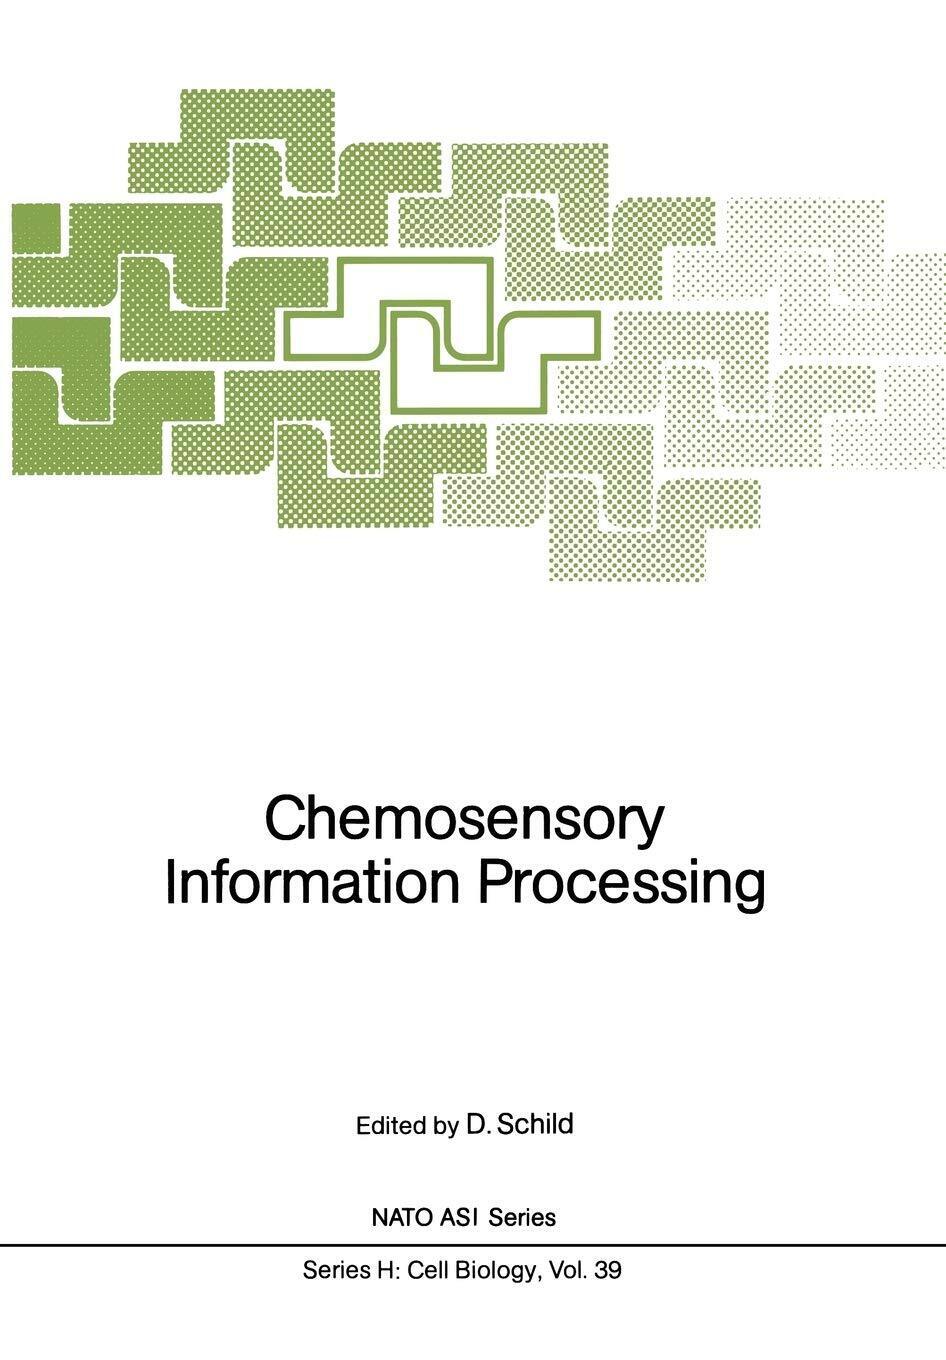 Chemosensory Information Processing - Detlev Schild - Springer, 2011